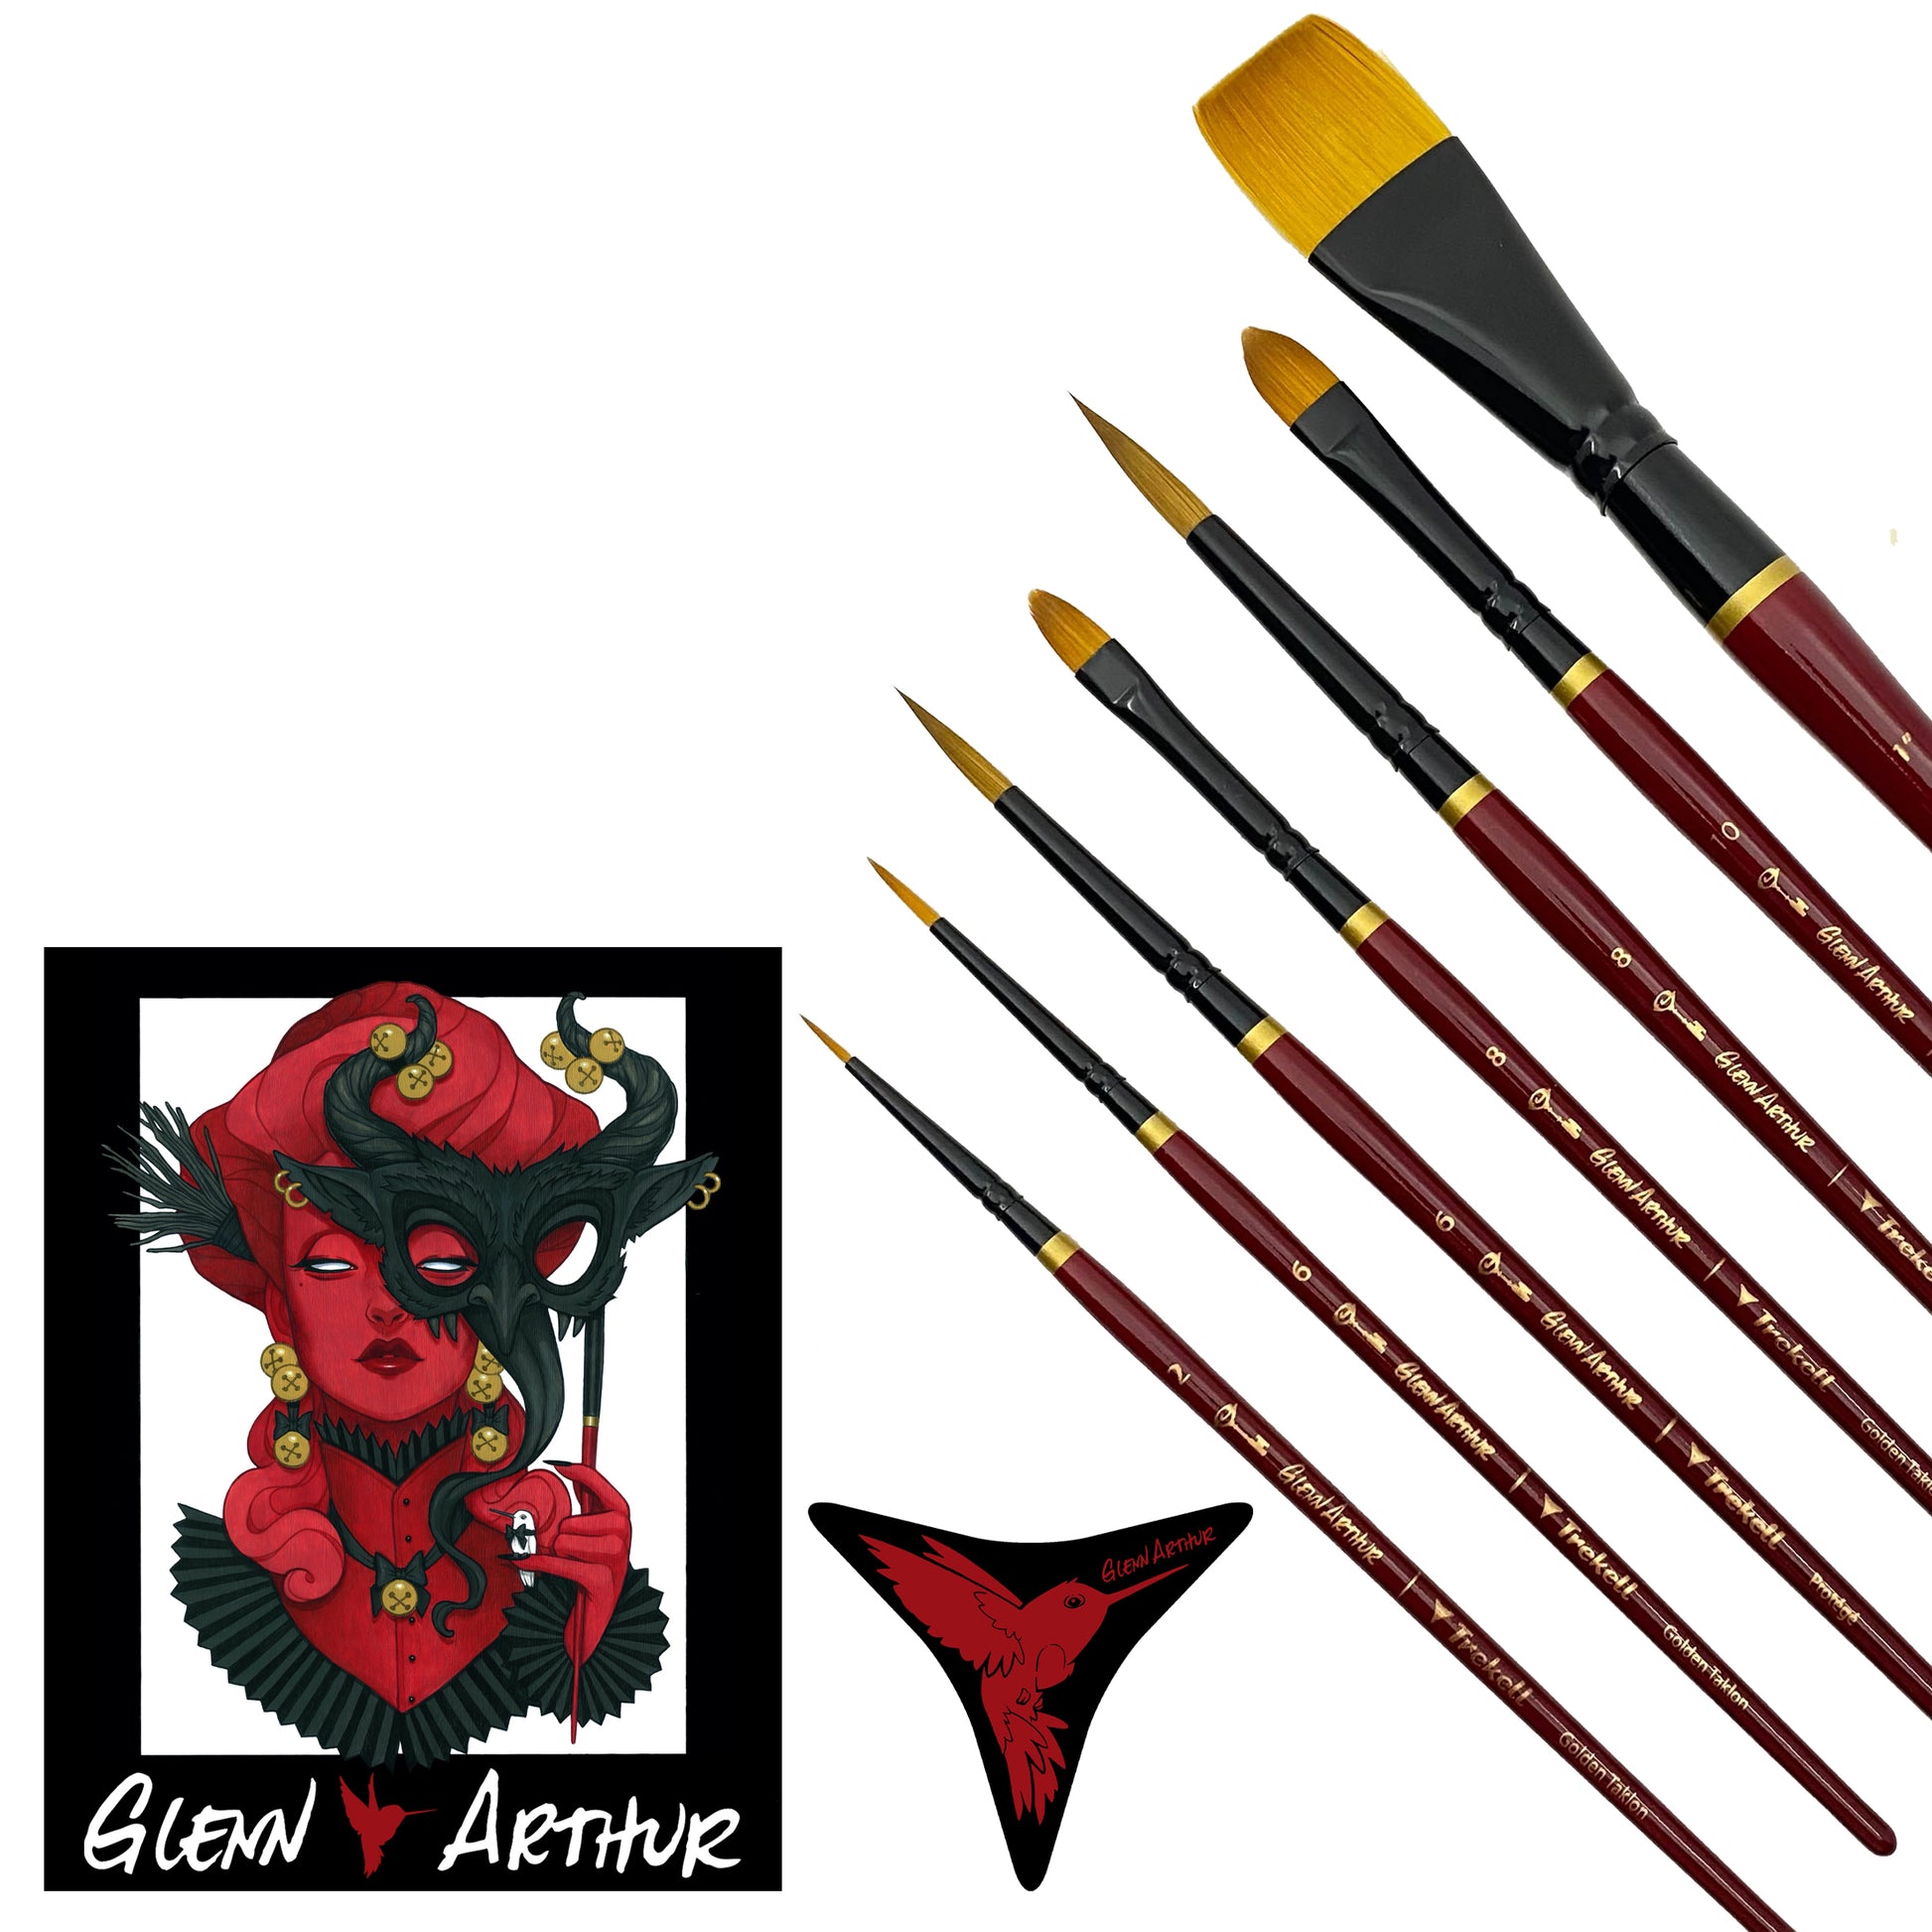 Glenn Arthur Limited Edition Brush Set - Trekell Art Supplies